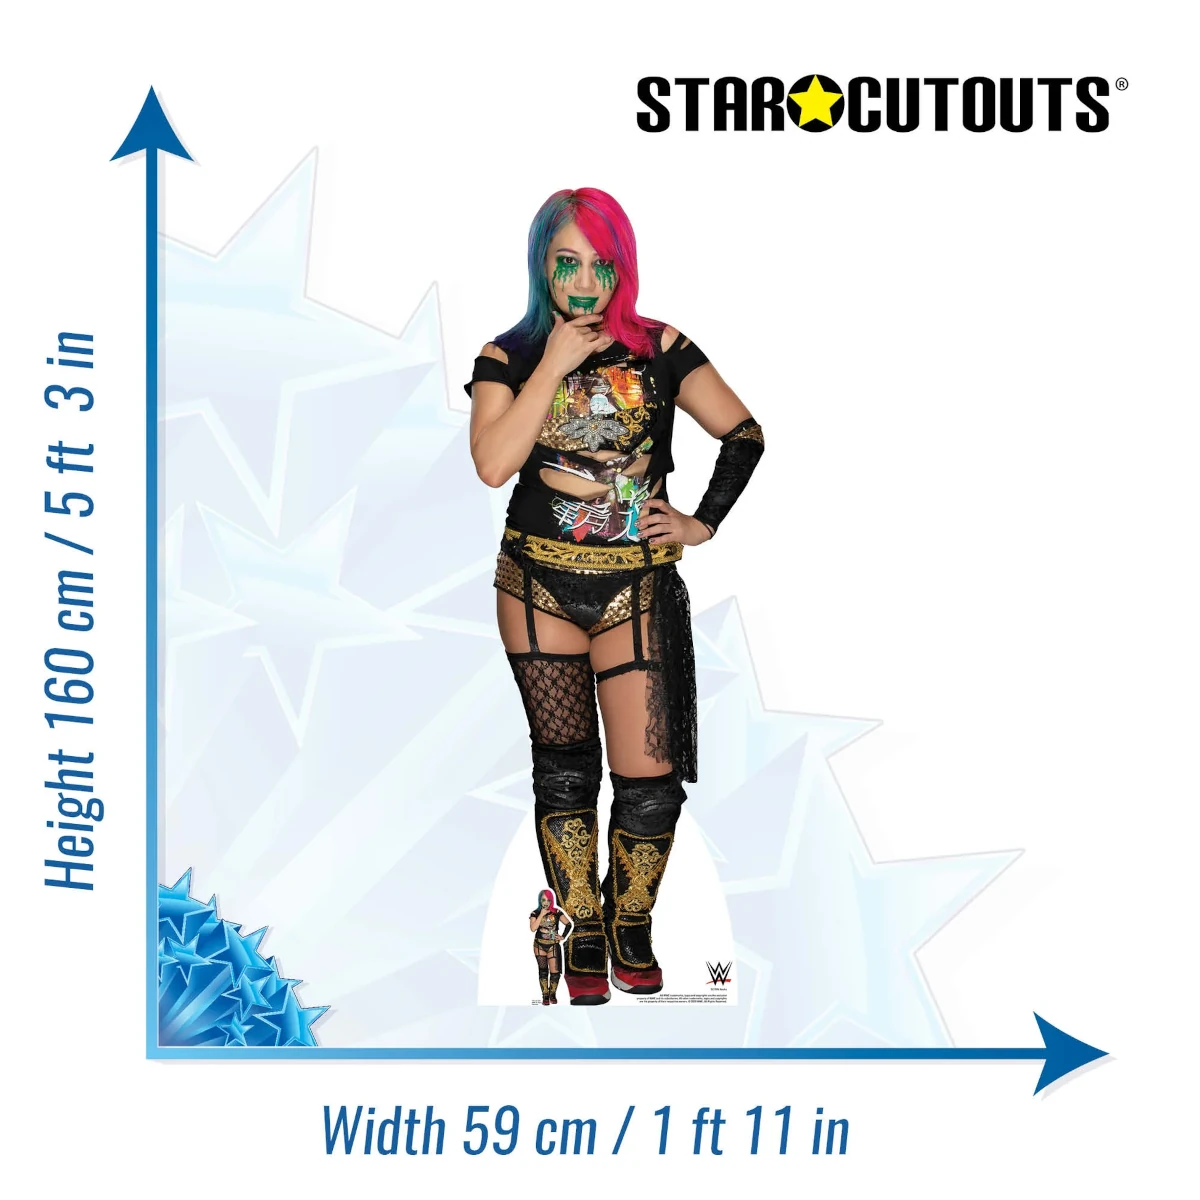 SC1596 Asuka (WWE) Official Lifesize + Mini Cardboard Cutout Standee Size